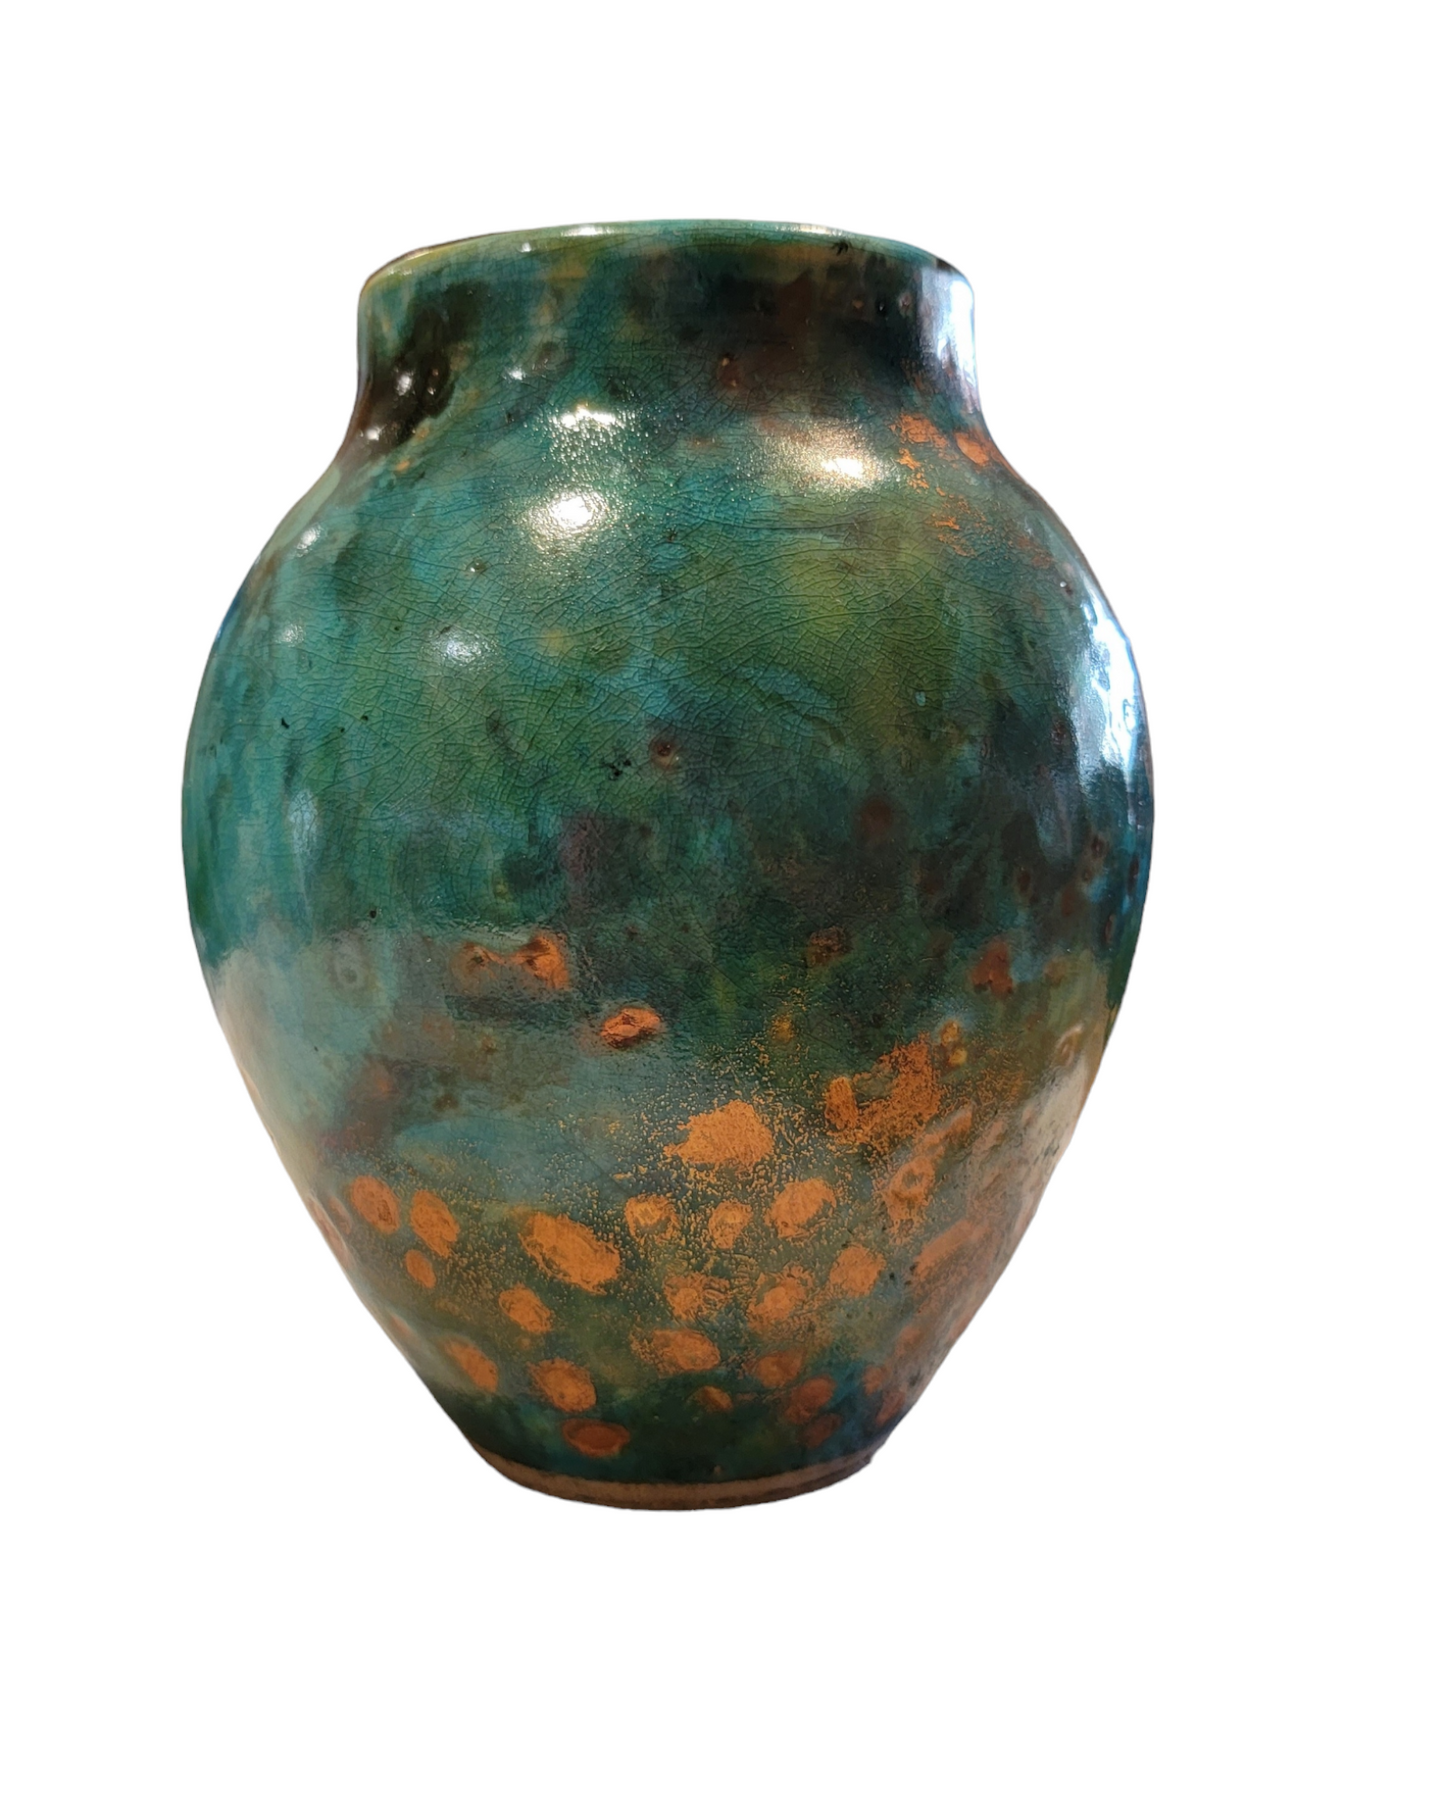 Turquoise and Copper Porcelain Raku Vase - #47